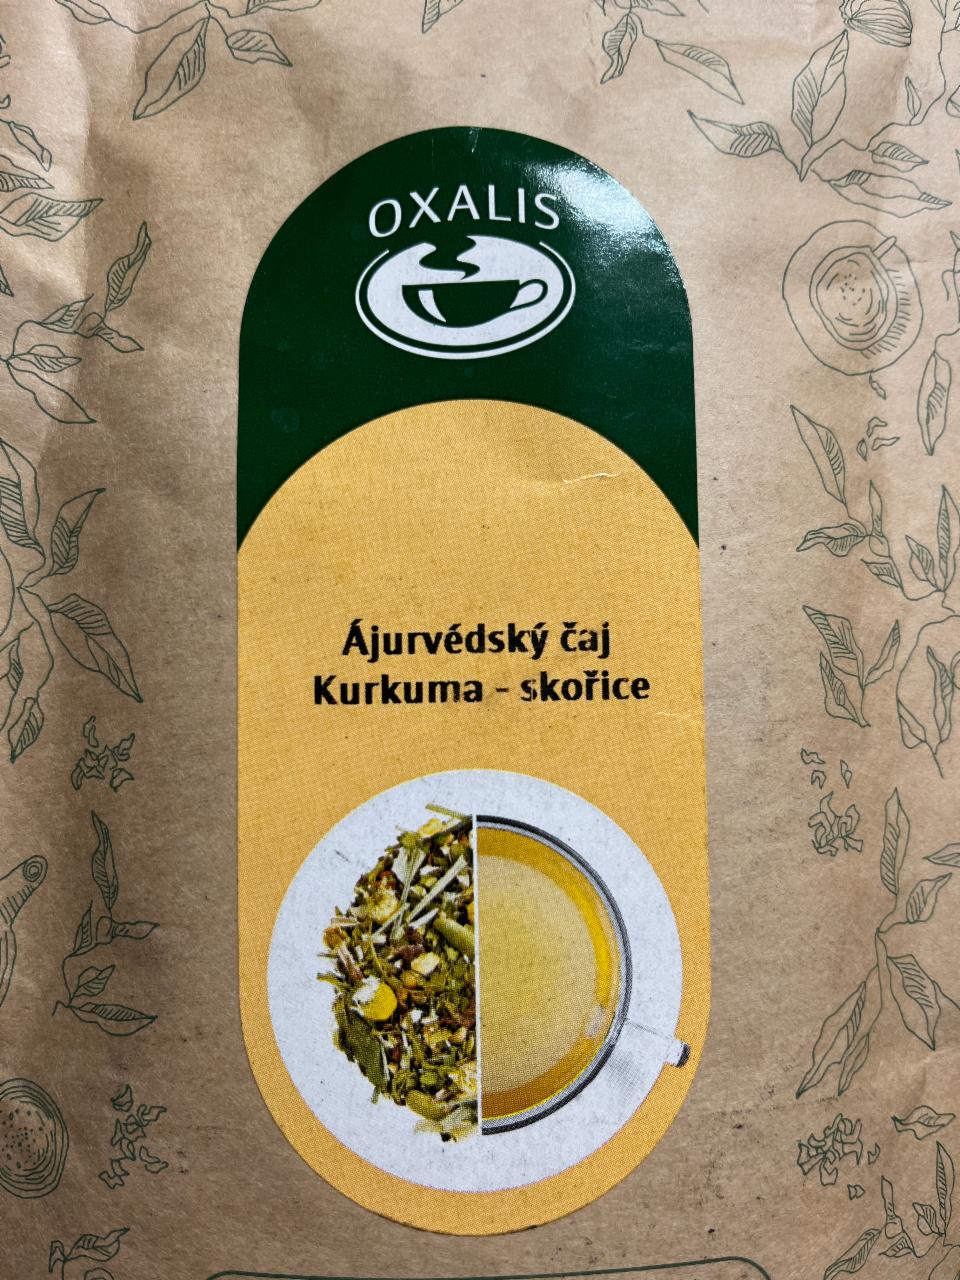 Fotografie - Ájurvédský čaj Kurkuma - skořice Oxalis